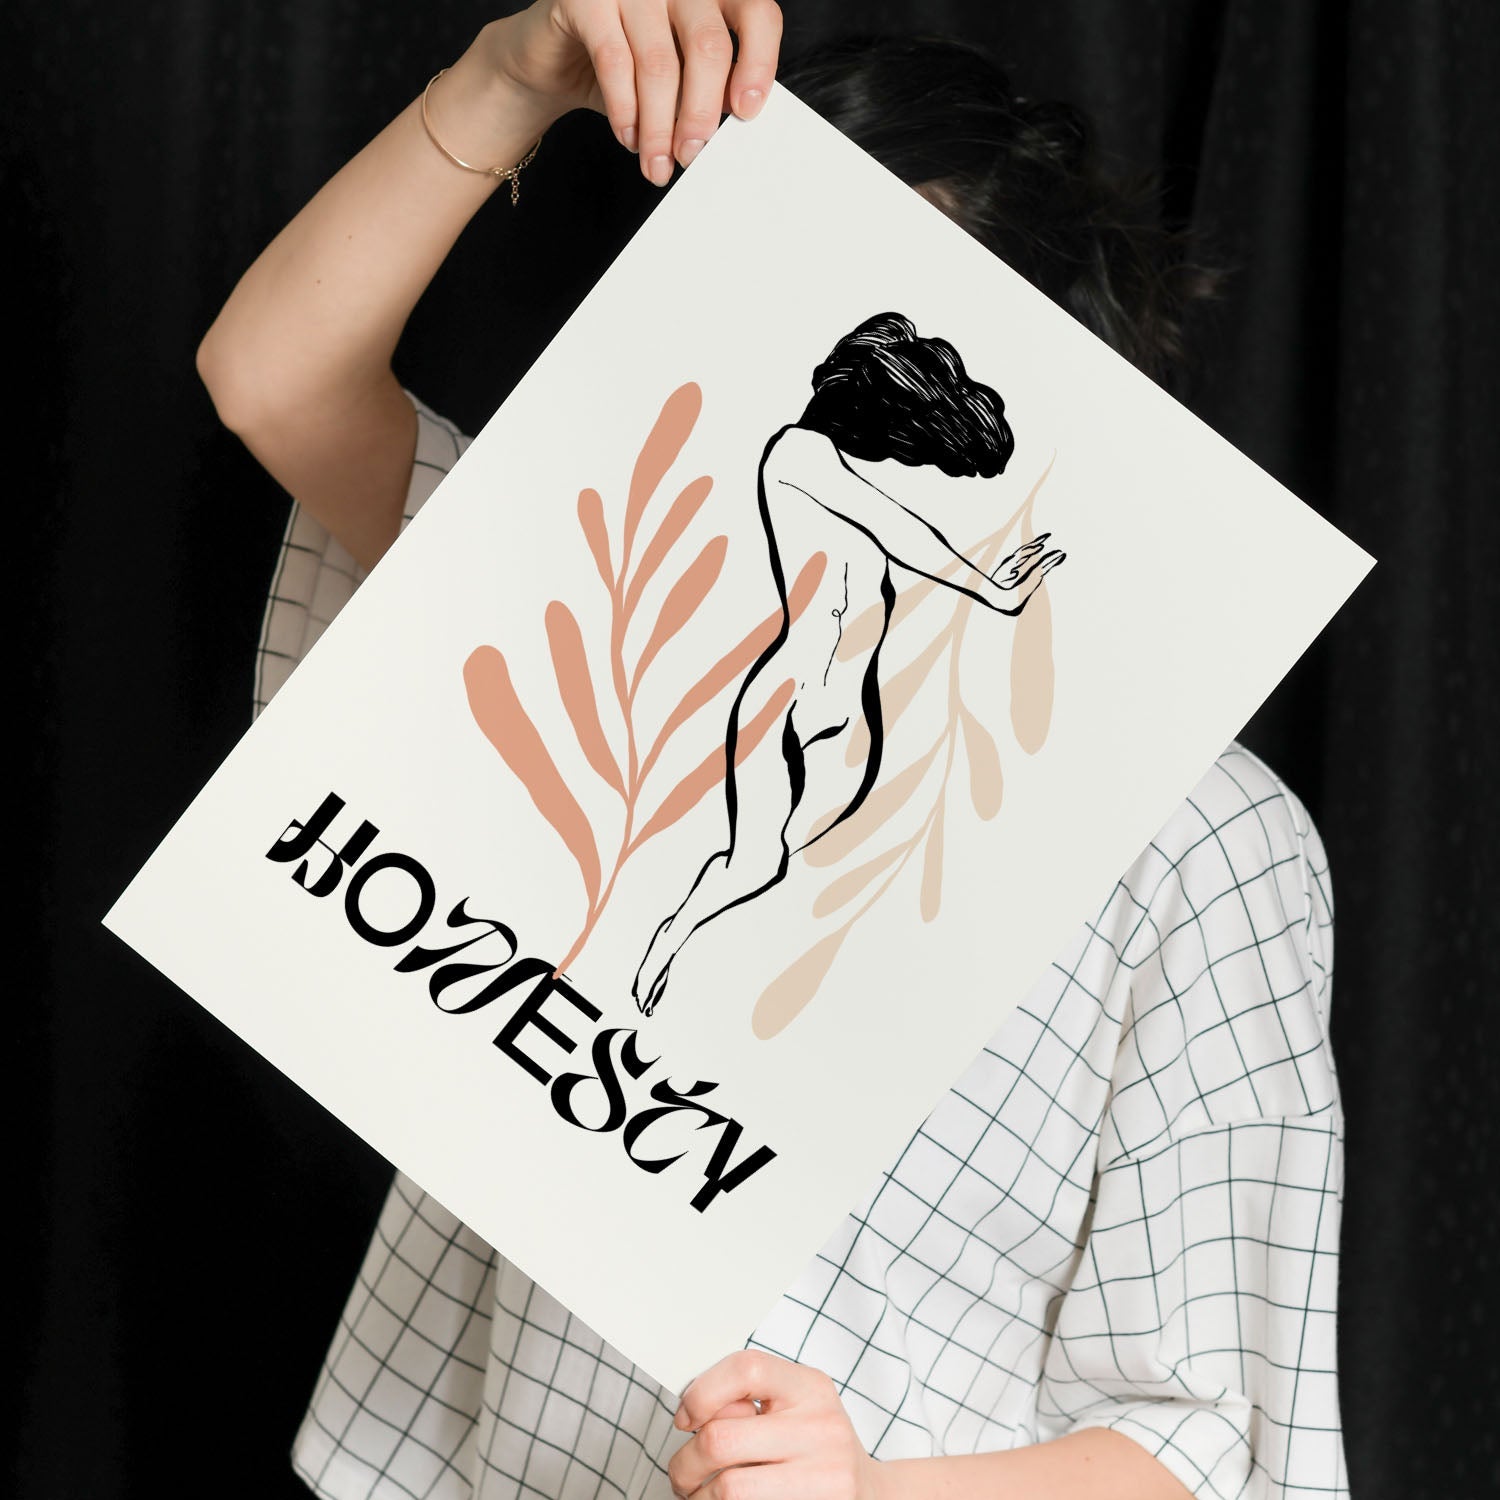 Honesty-Artwork-Nacnic-Nacnic Estudio SL